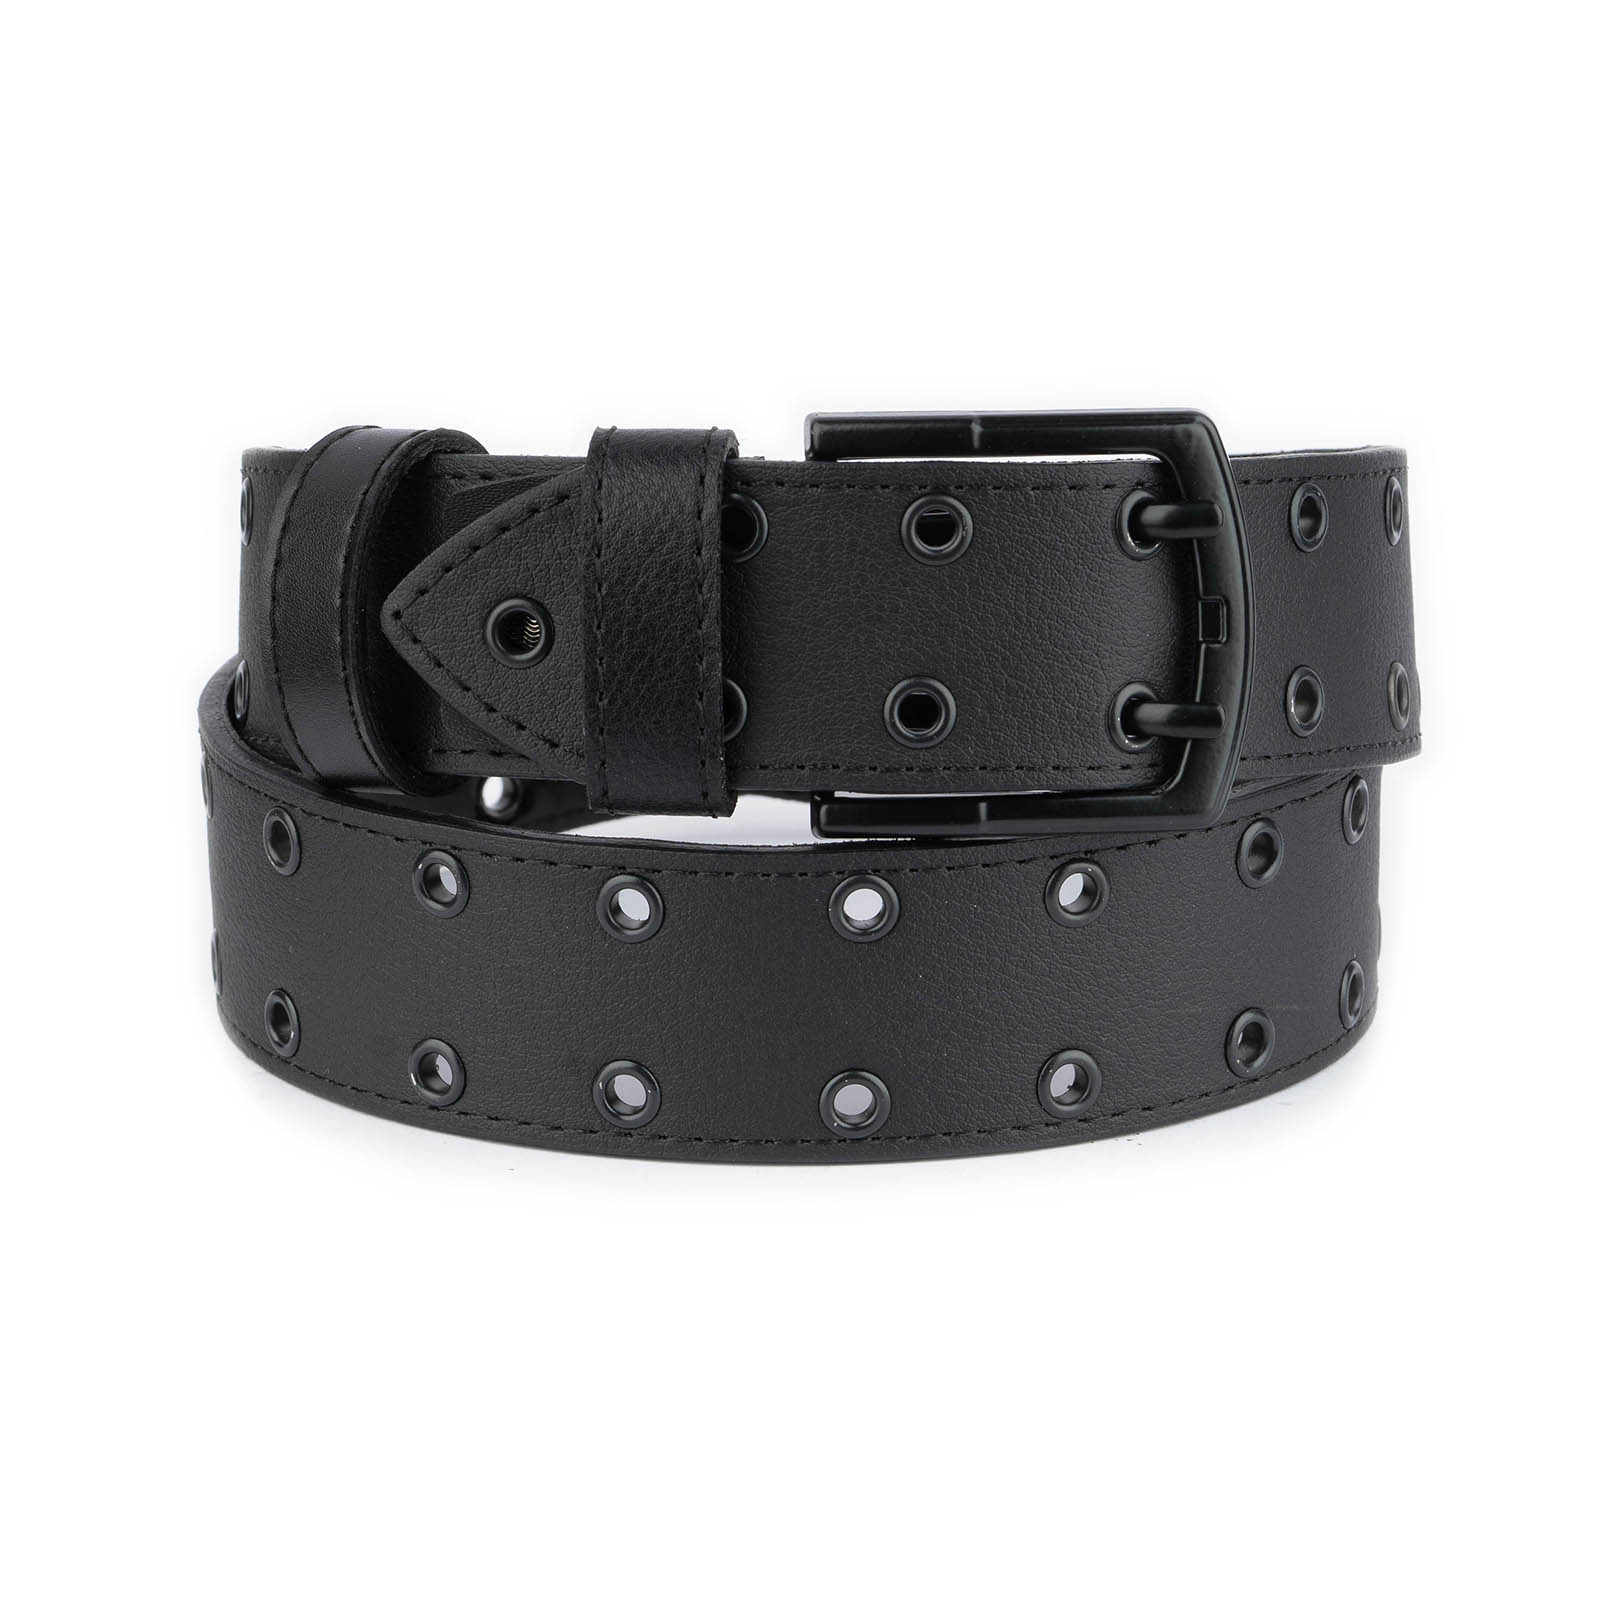 Buy Grommet Belt Black Rivets Vegan Leather - LeatherBeltsOnline.com